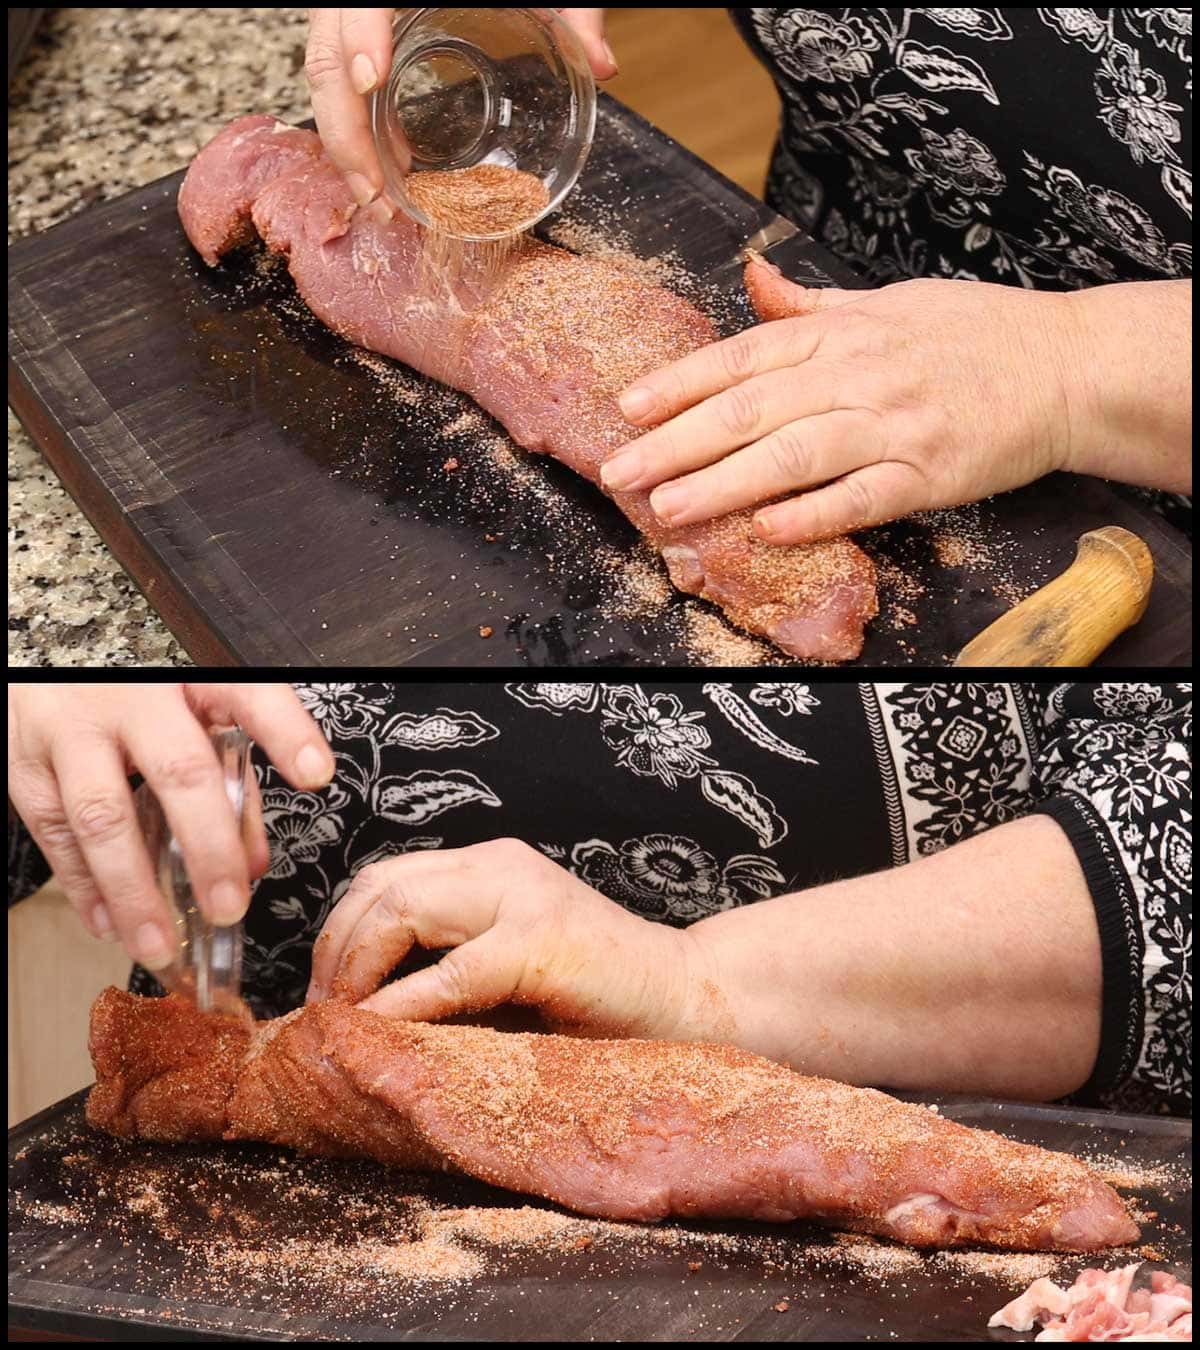 seasoning the pork tenderloin with rub